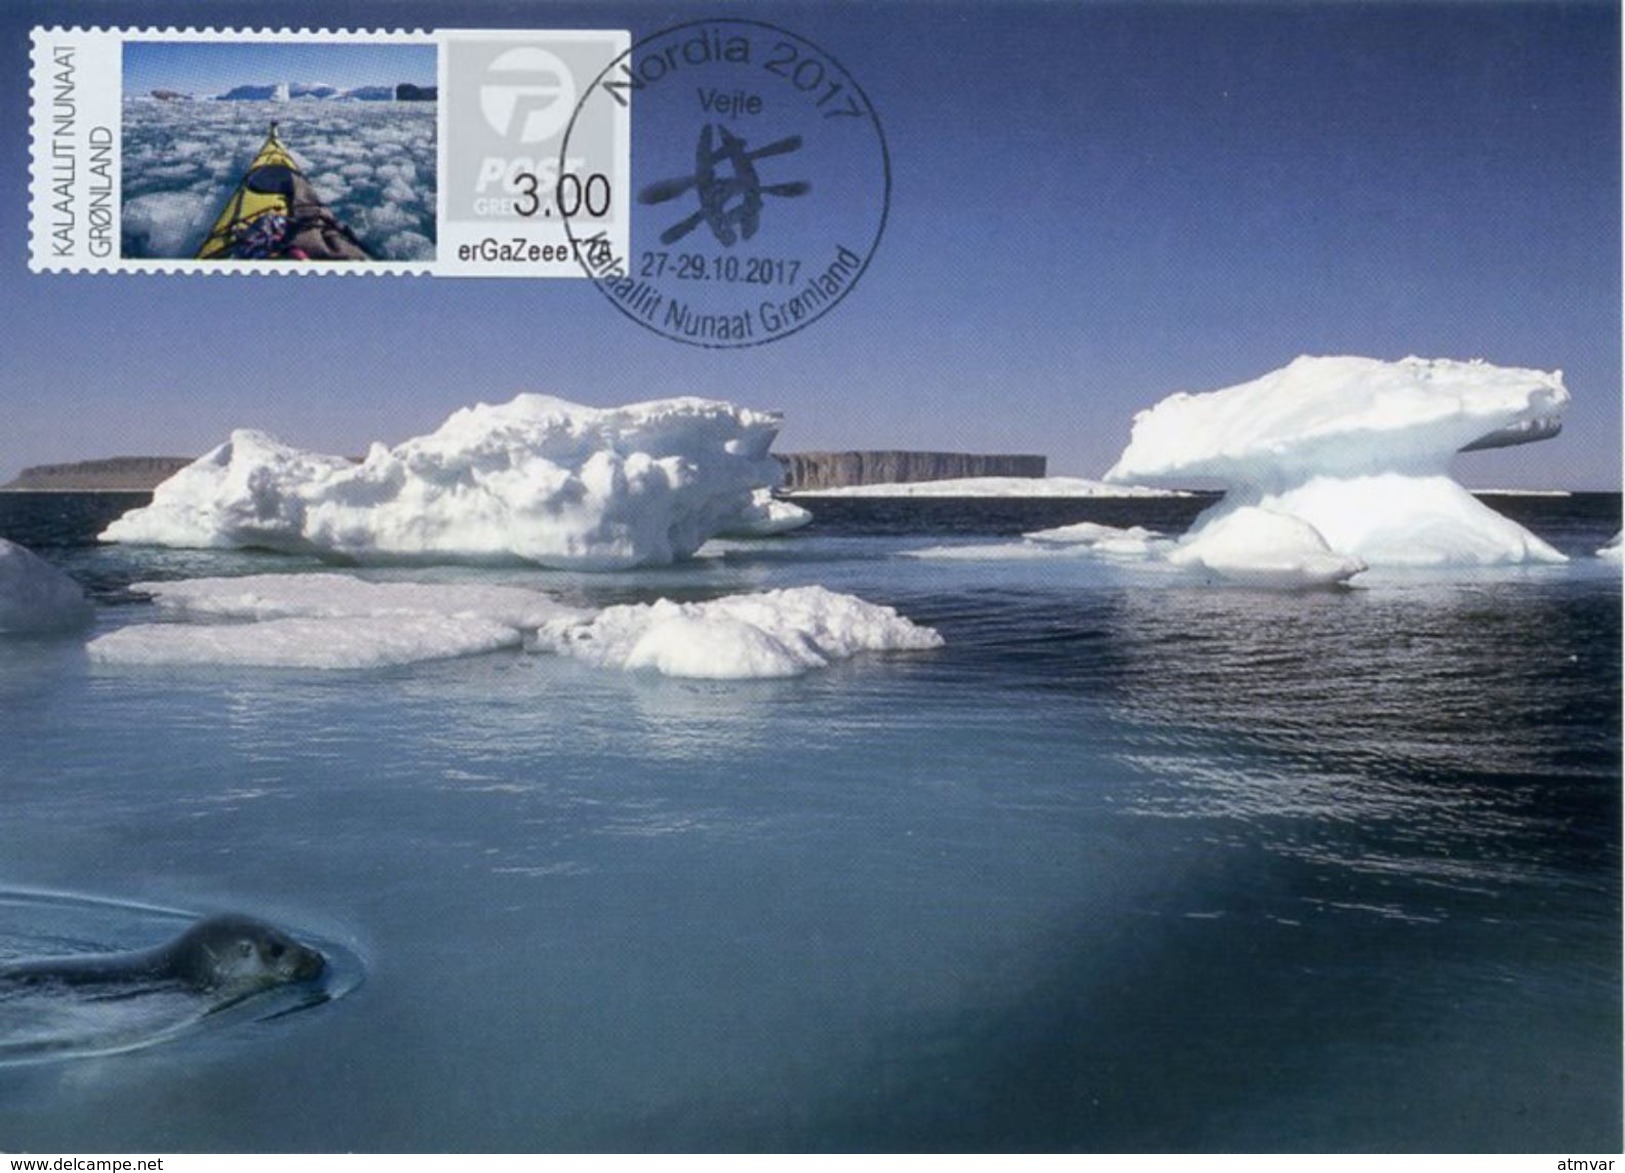 GREENLAND GROENLAND (2017) - Carte Maximum Card ATM - Harp Seal In Greenlandic Waters, Phoque, Iceberg, Kayak  - NORDIA - Frankeervignetten